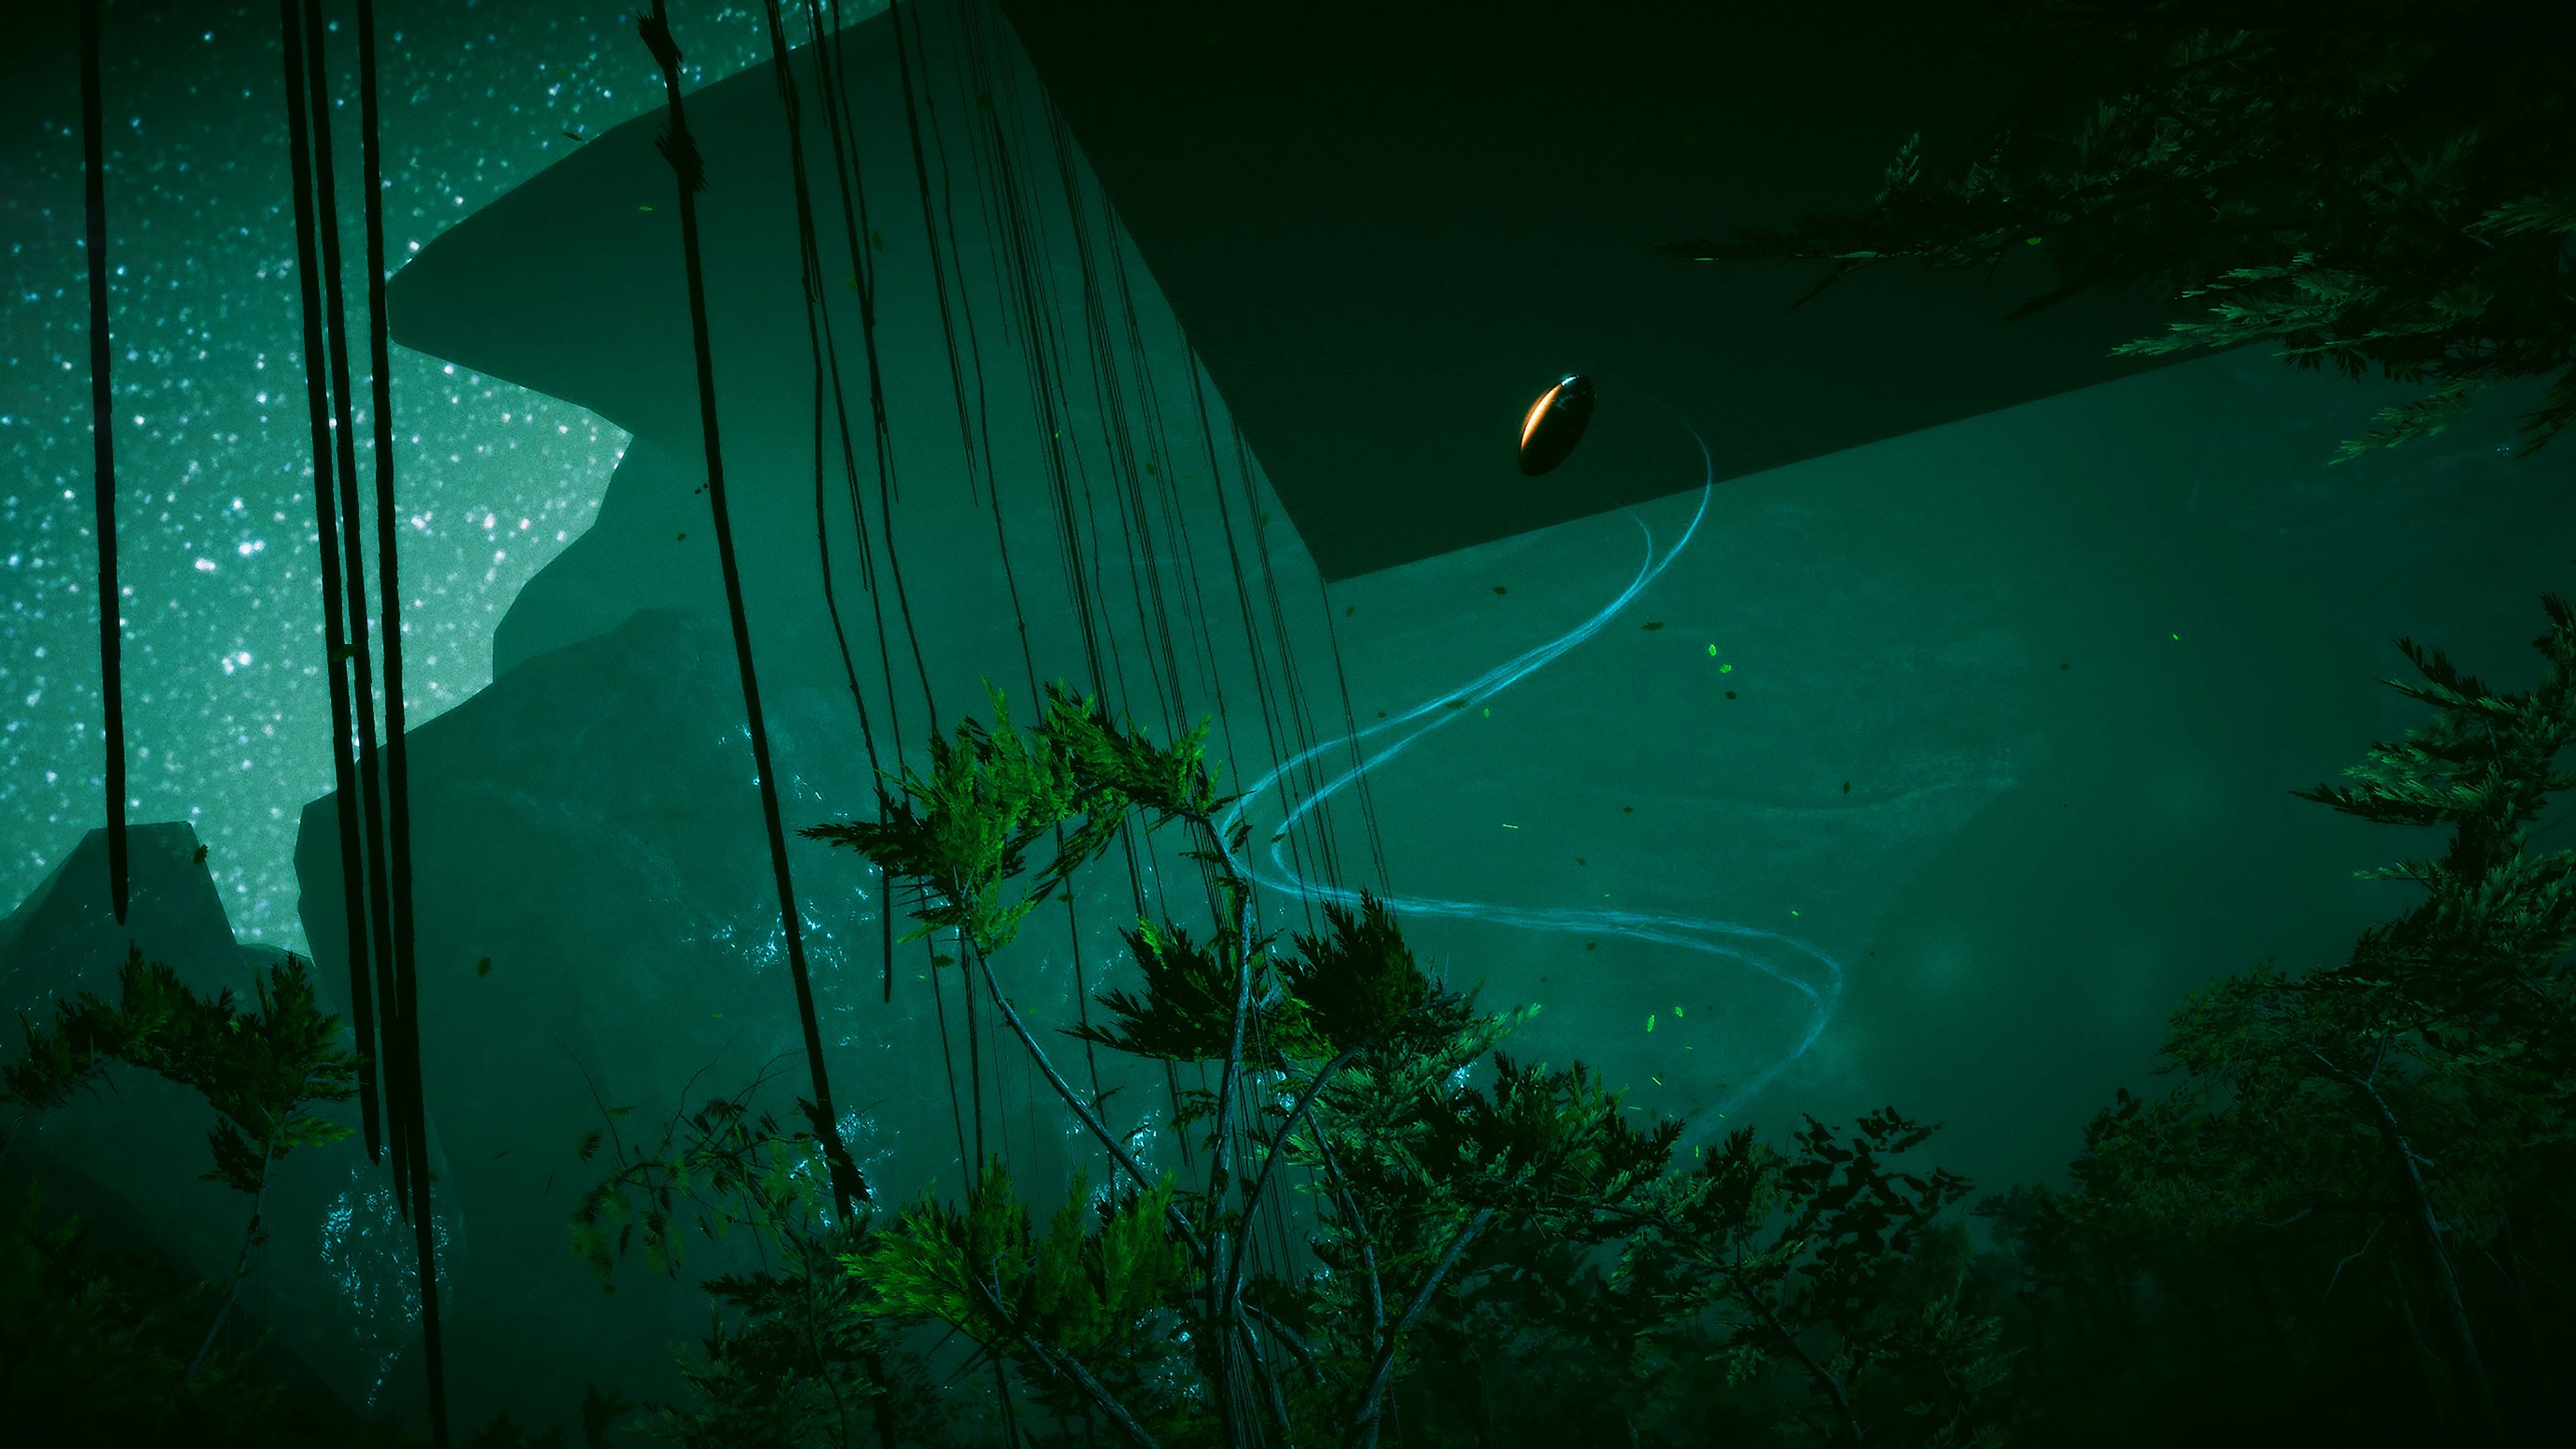 Captura de pantalla de Exo One que muestra un objeto volando sobre árboles